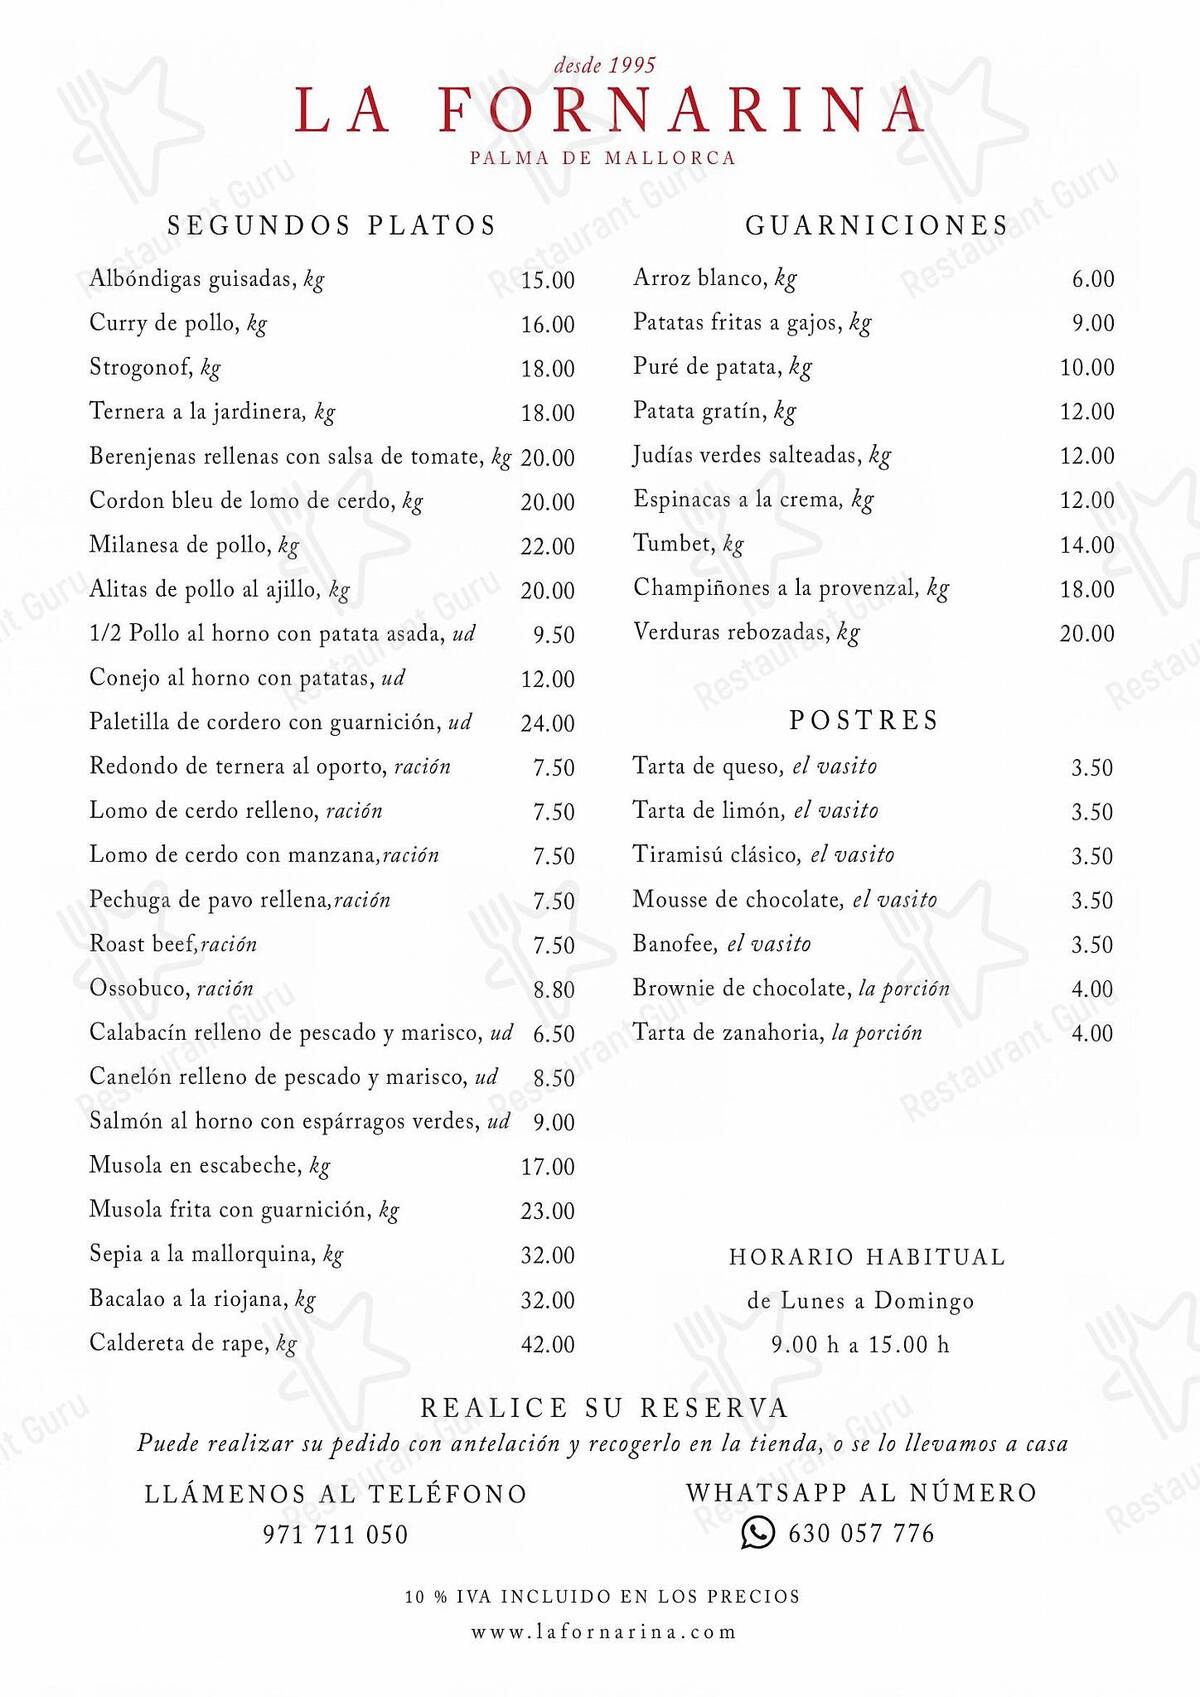 La Fornarina In Palma Restaurant Reviews